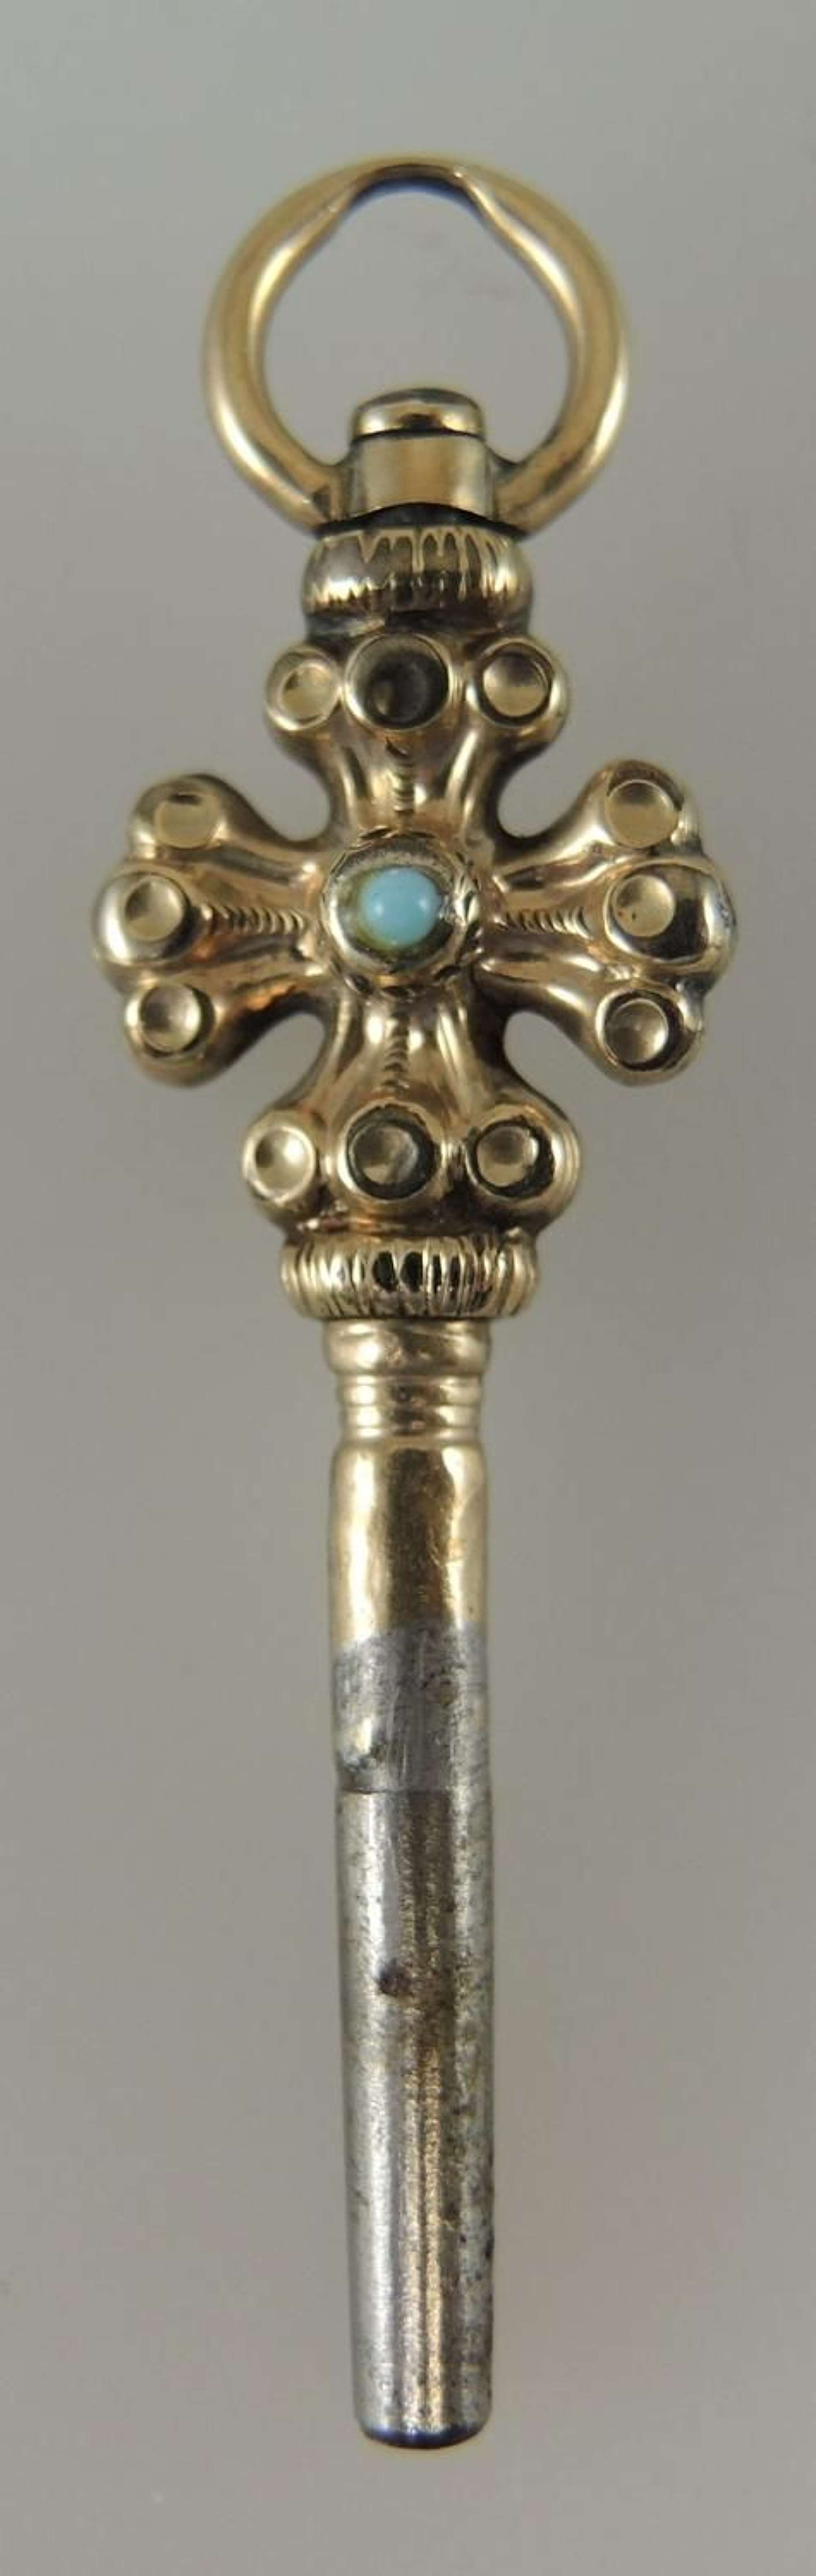 Gilt and Turquoise Set CROSS Pocket Watch Key. Circa 1880